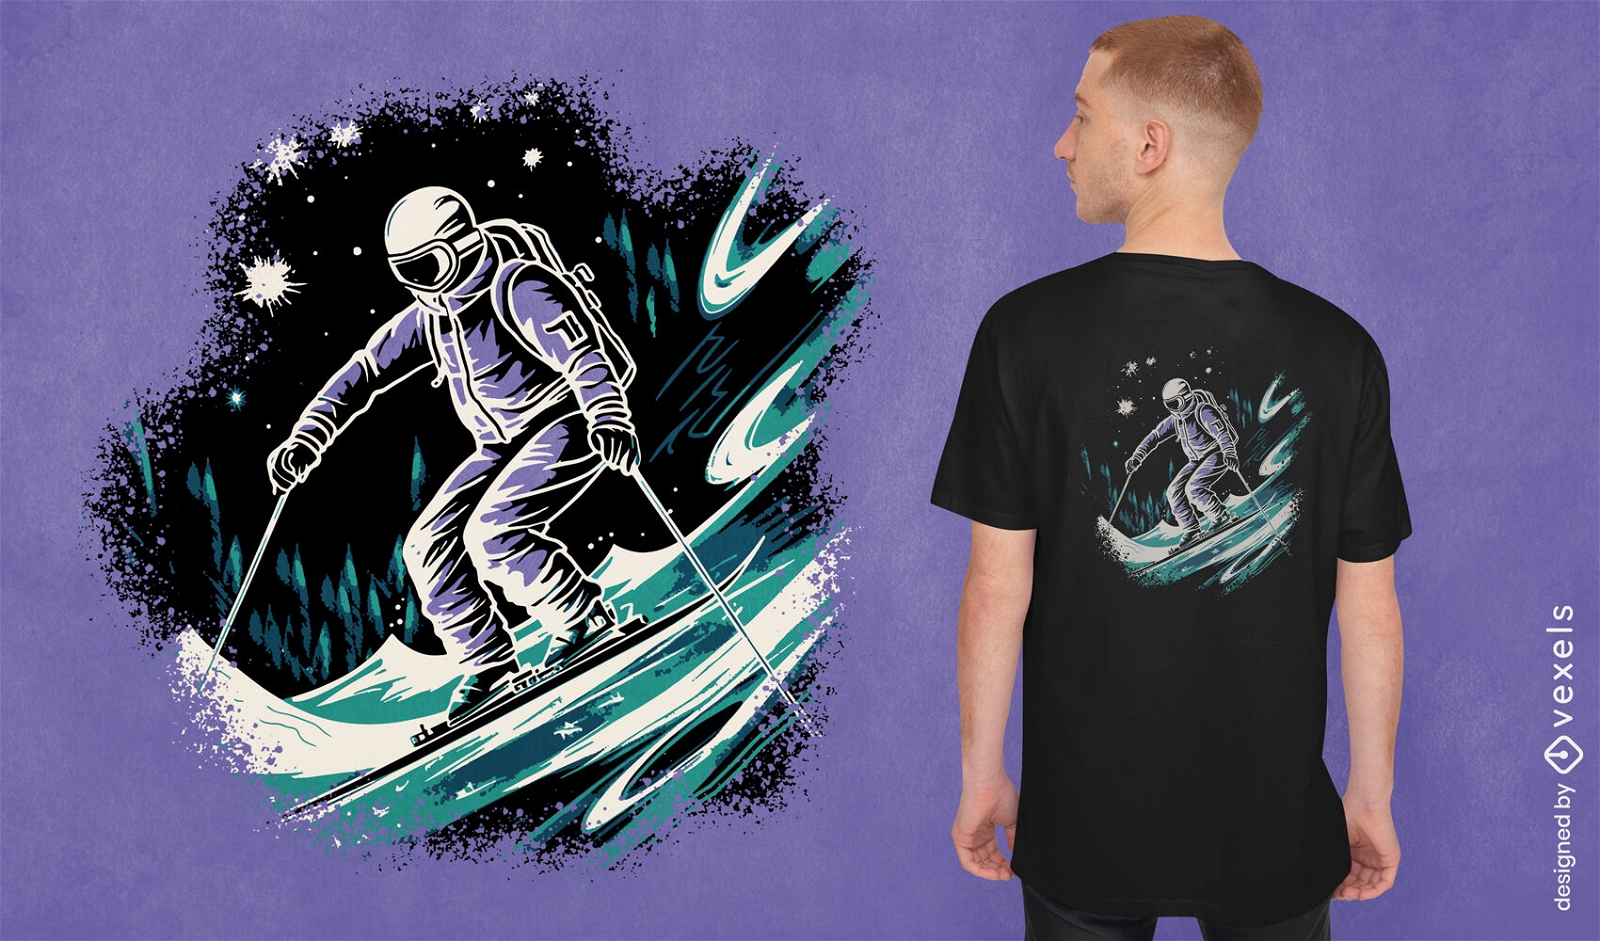 Skiing snow sport t-shirt design